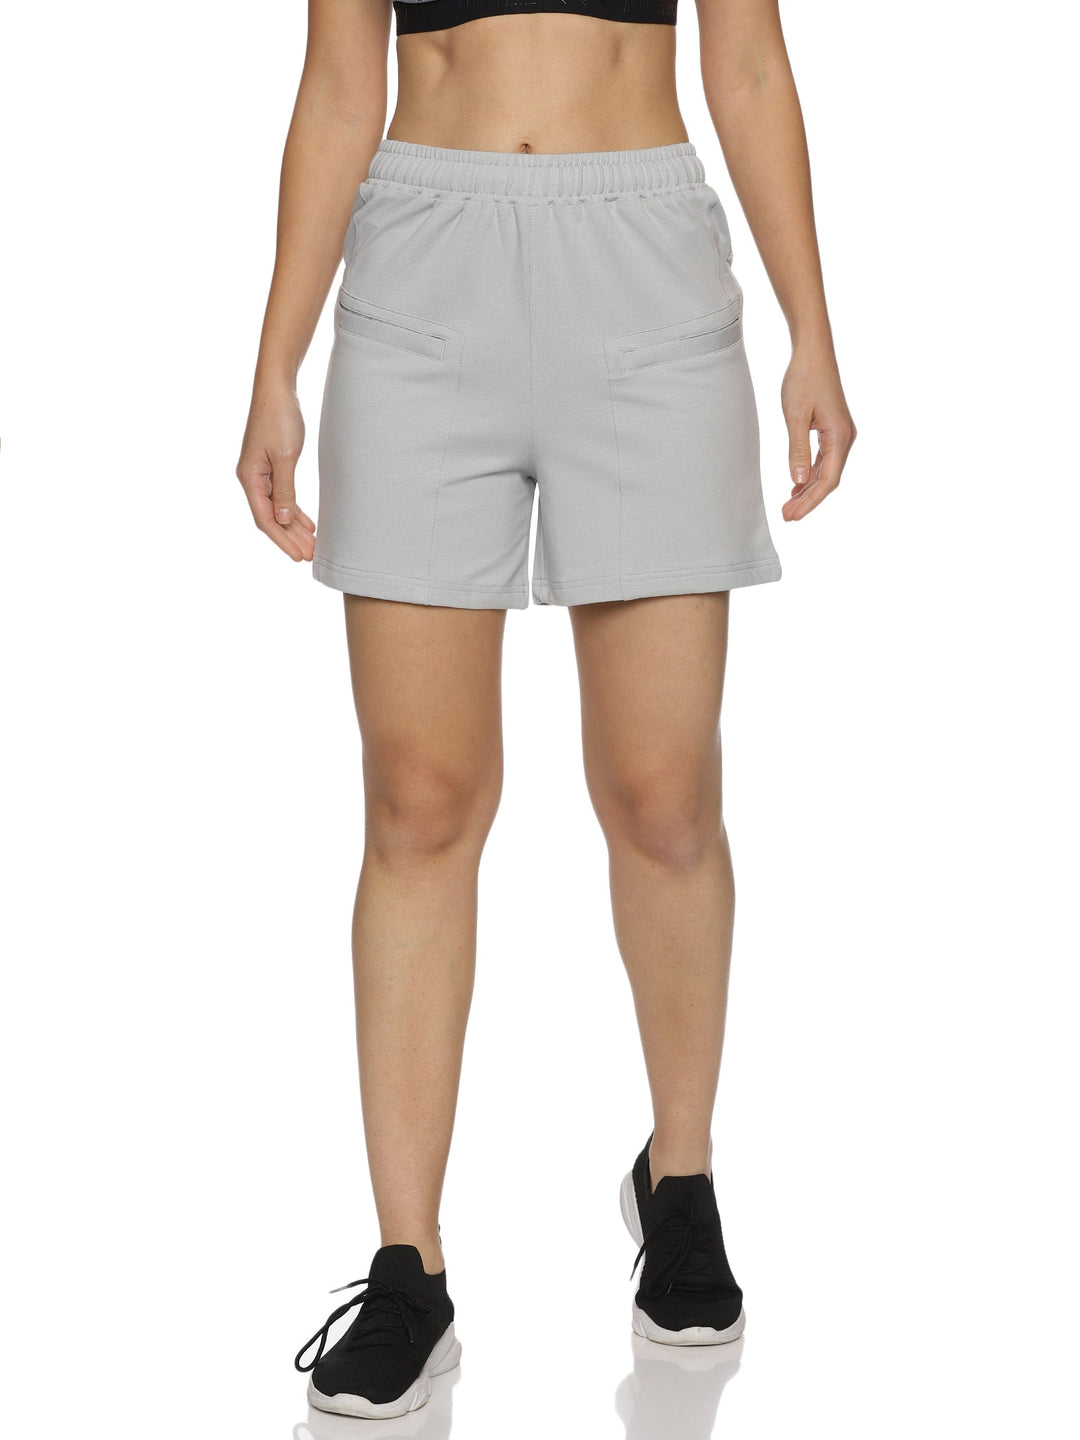 Women's Solid Training Shorts With Elasticated Drawstring Waist & Zipper Pockets (Grey)